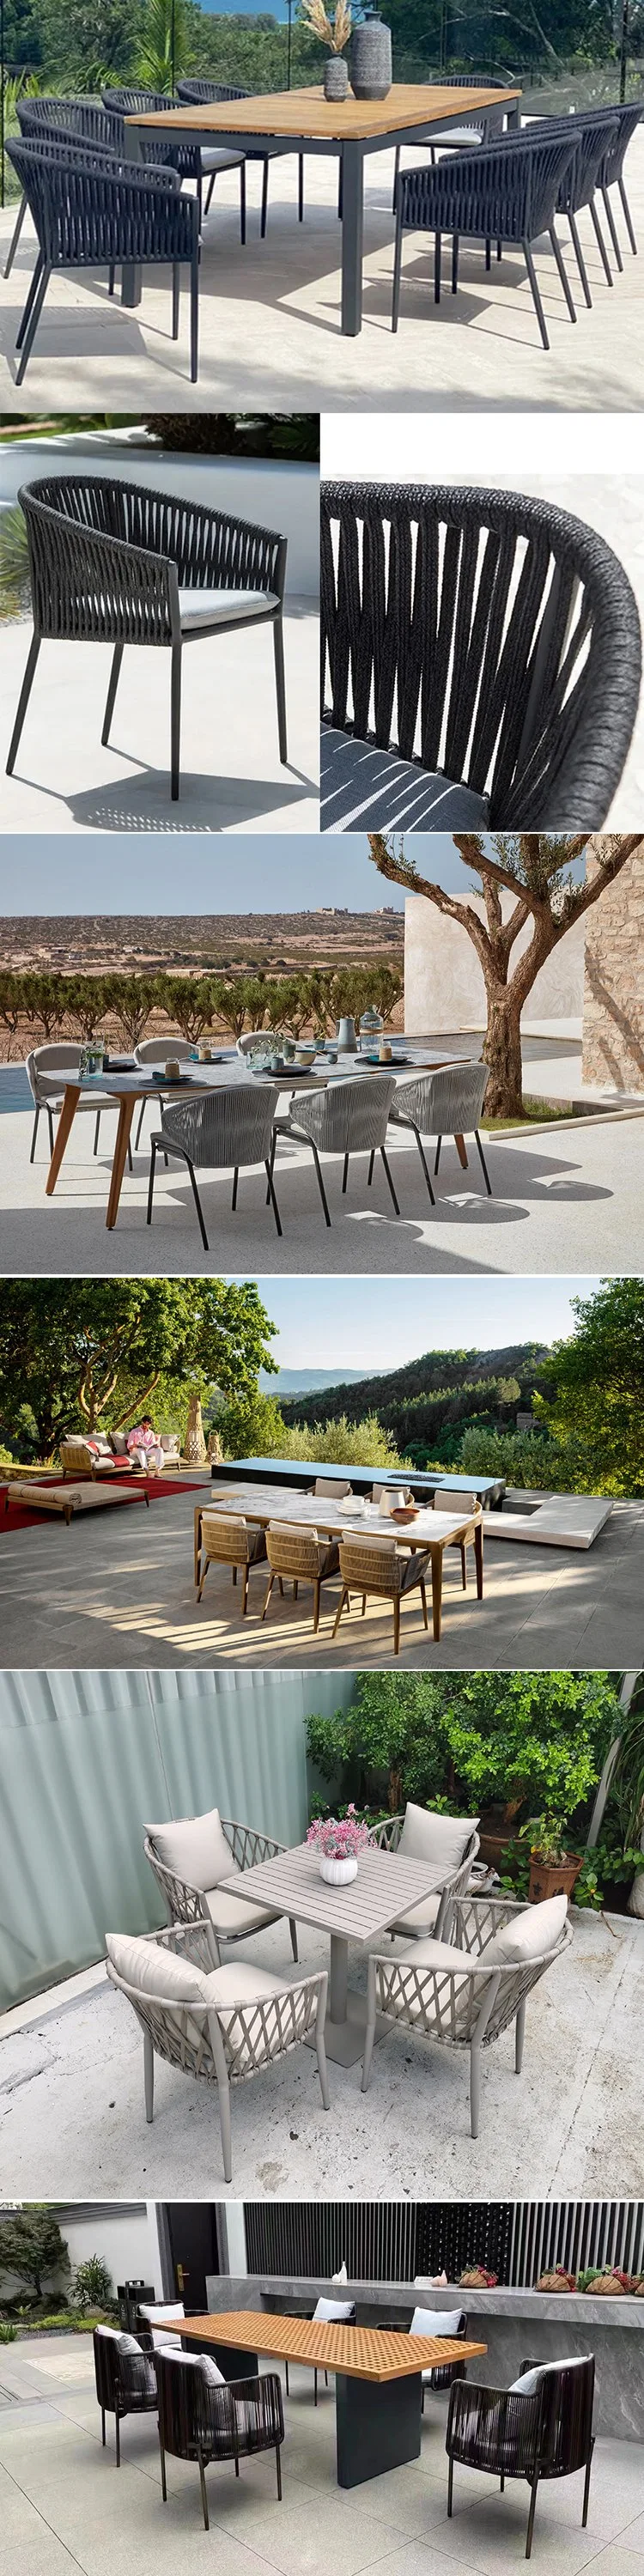 Outdoor Aluminum Teak Wood Coffee Tea Chair Table Furniture Dining Set Garden for Cafe Outdoor